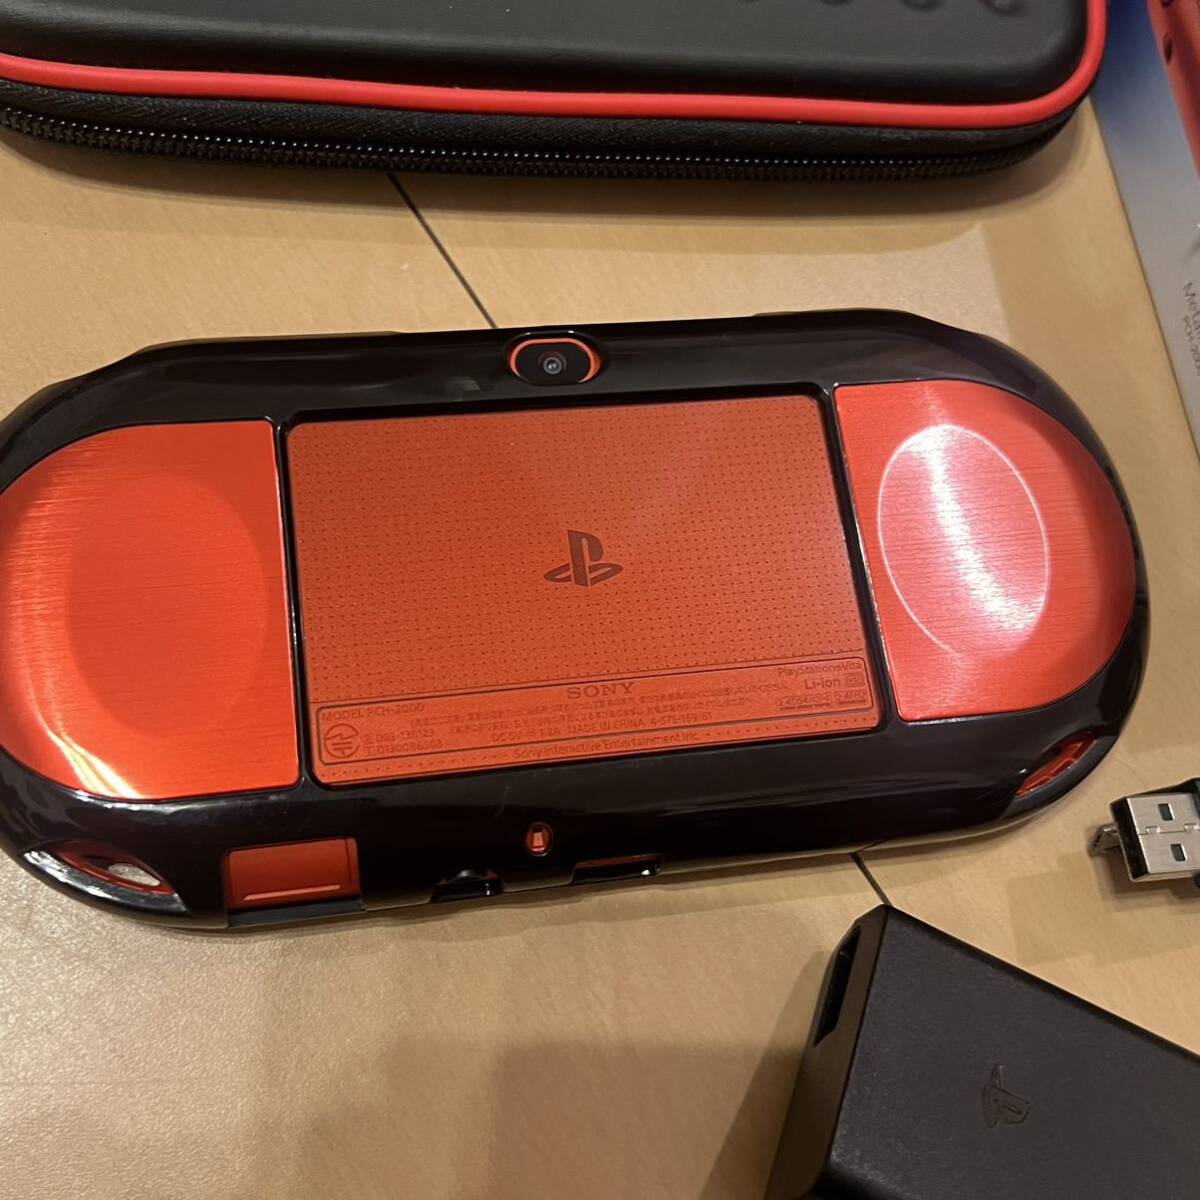 PlayStation Vita Wi-Fi модель металлик * красный PCH-2000 ZA26 SONY PSVITA